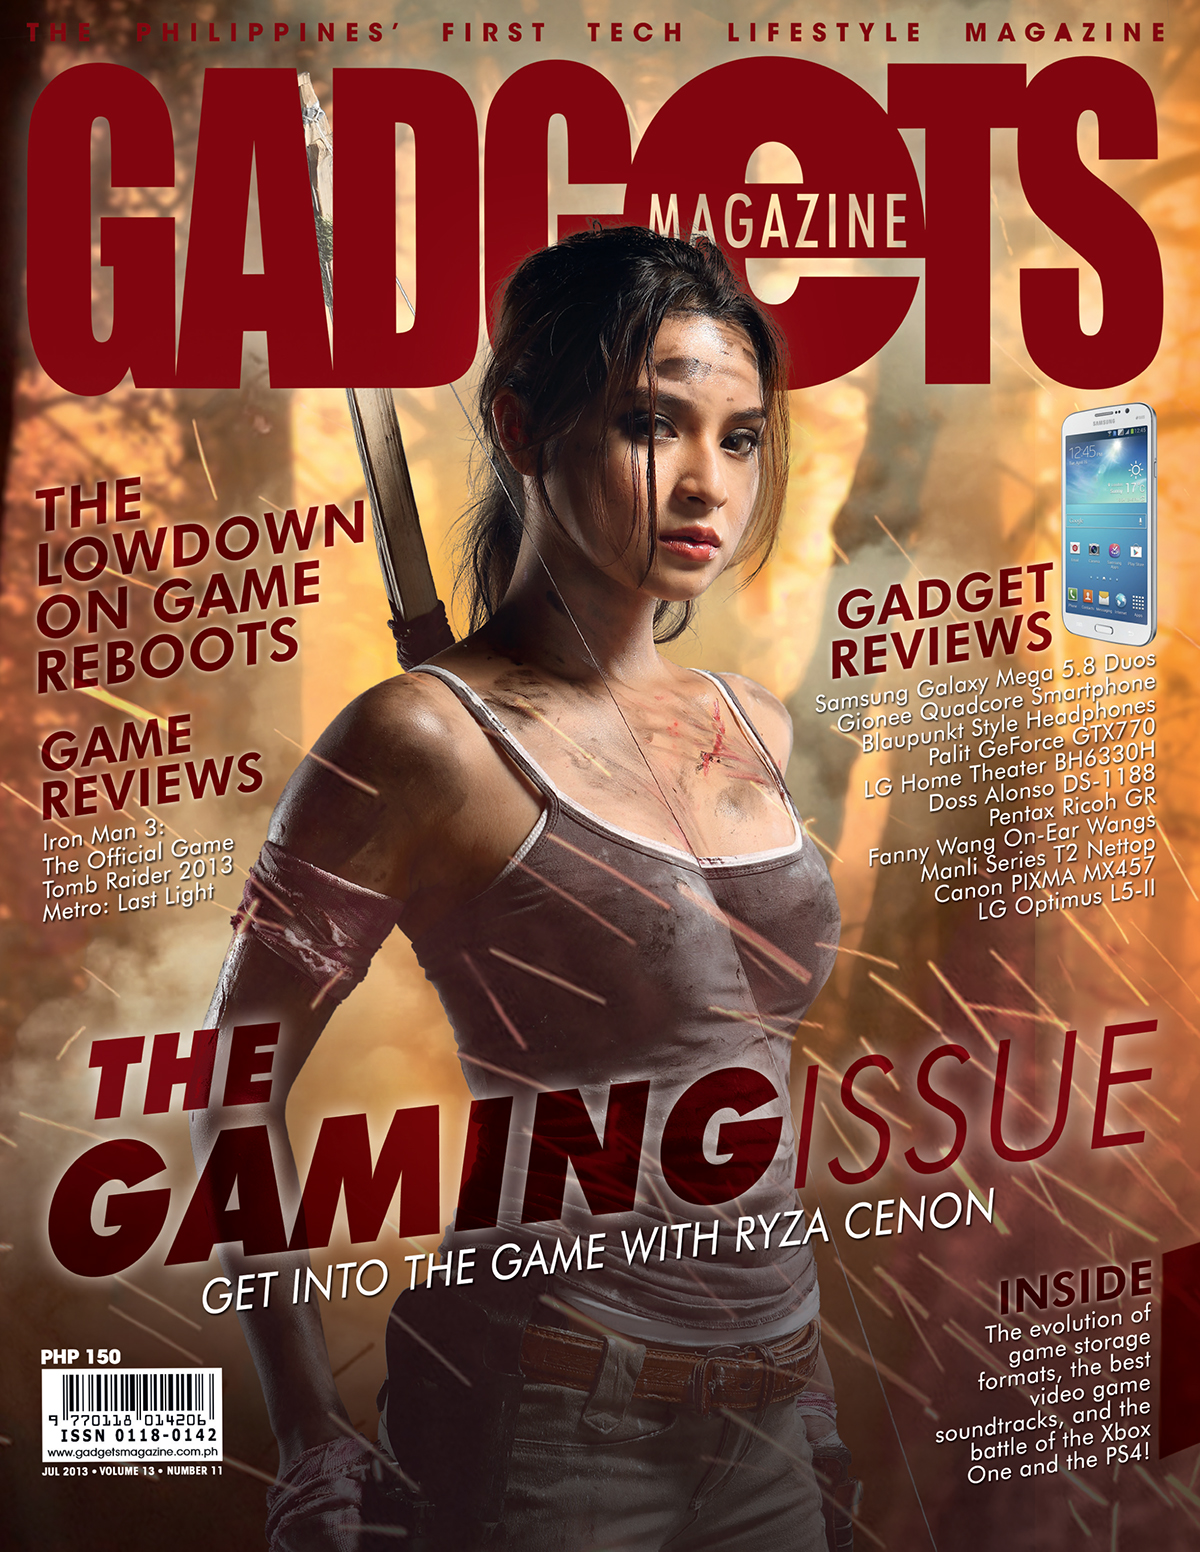 Ryza Cenon lara croft tomb raider Cosplay costume play Video Games fashion editorial Gaming cover magazine